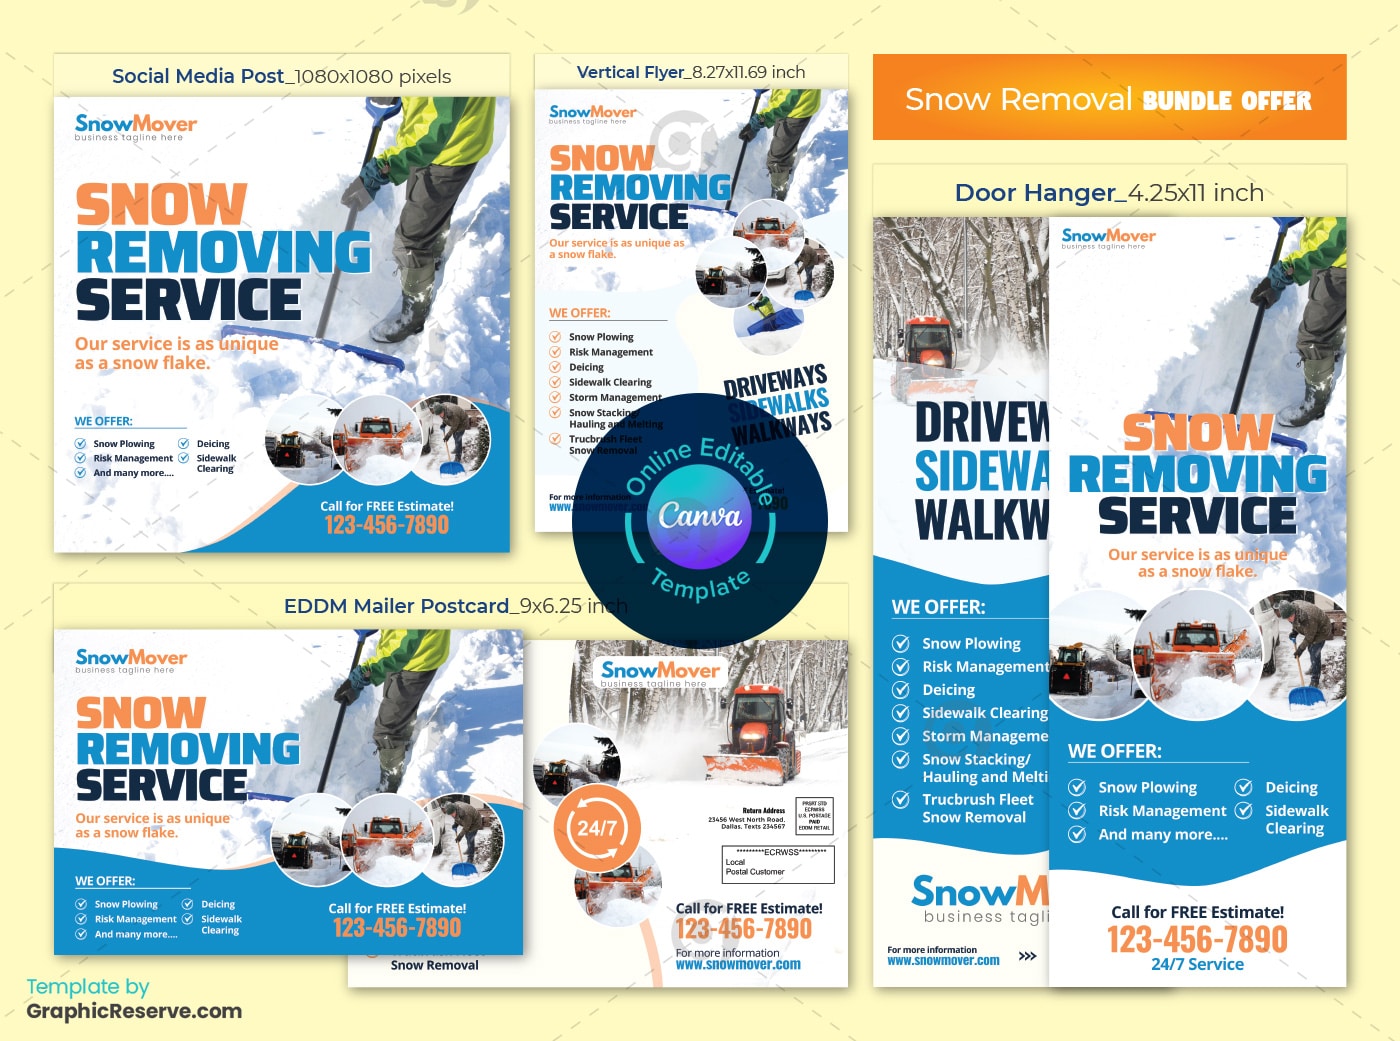 Snow Removal Marketing Material Bundle Design_v2 - Graphic Reserve